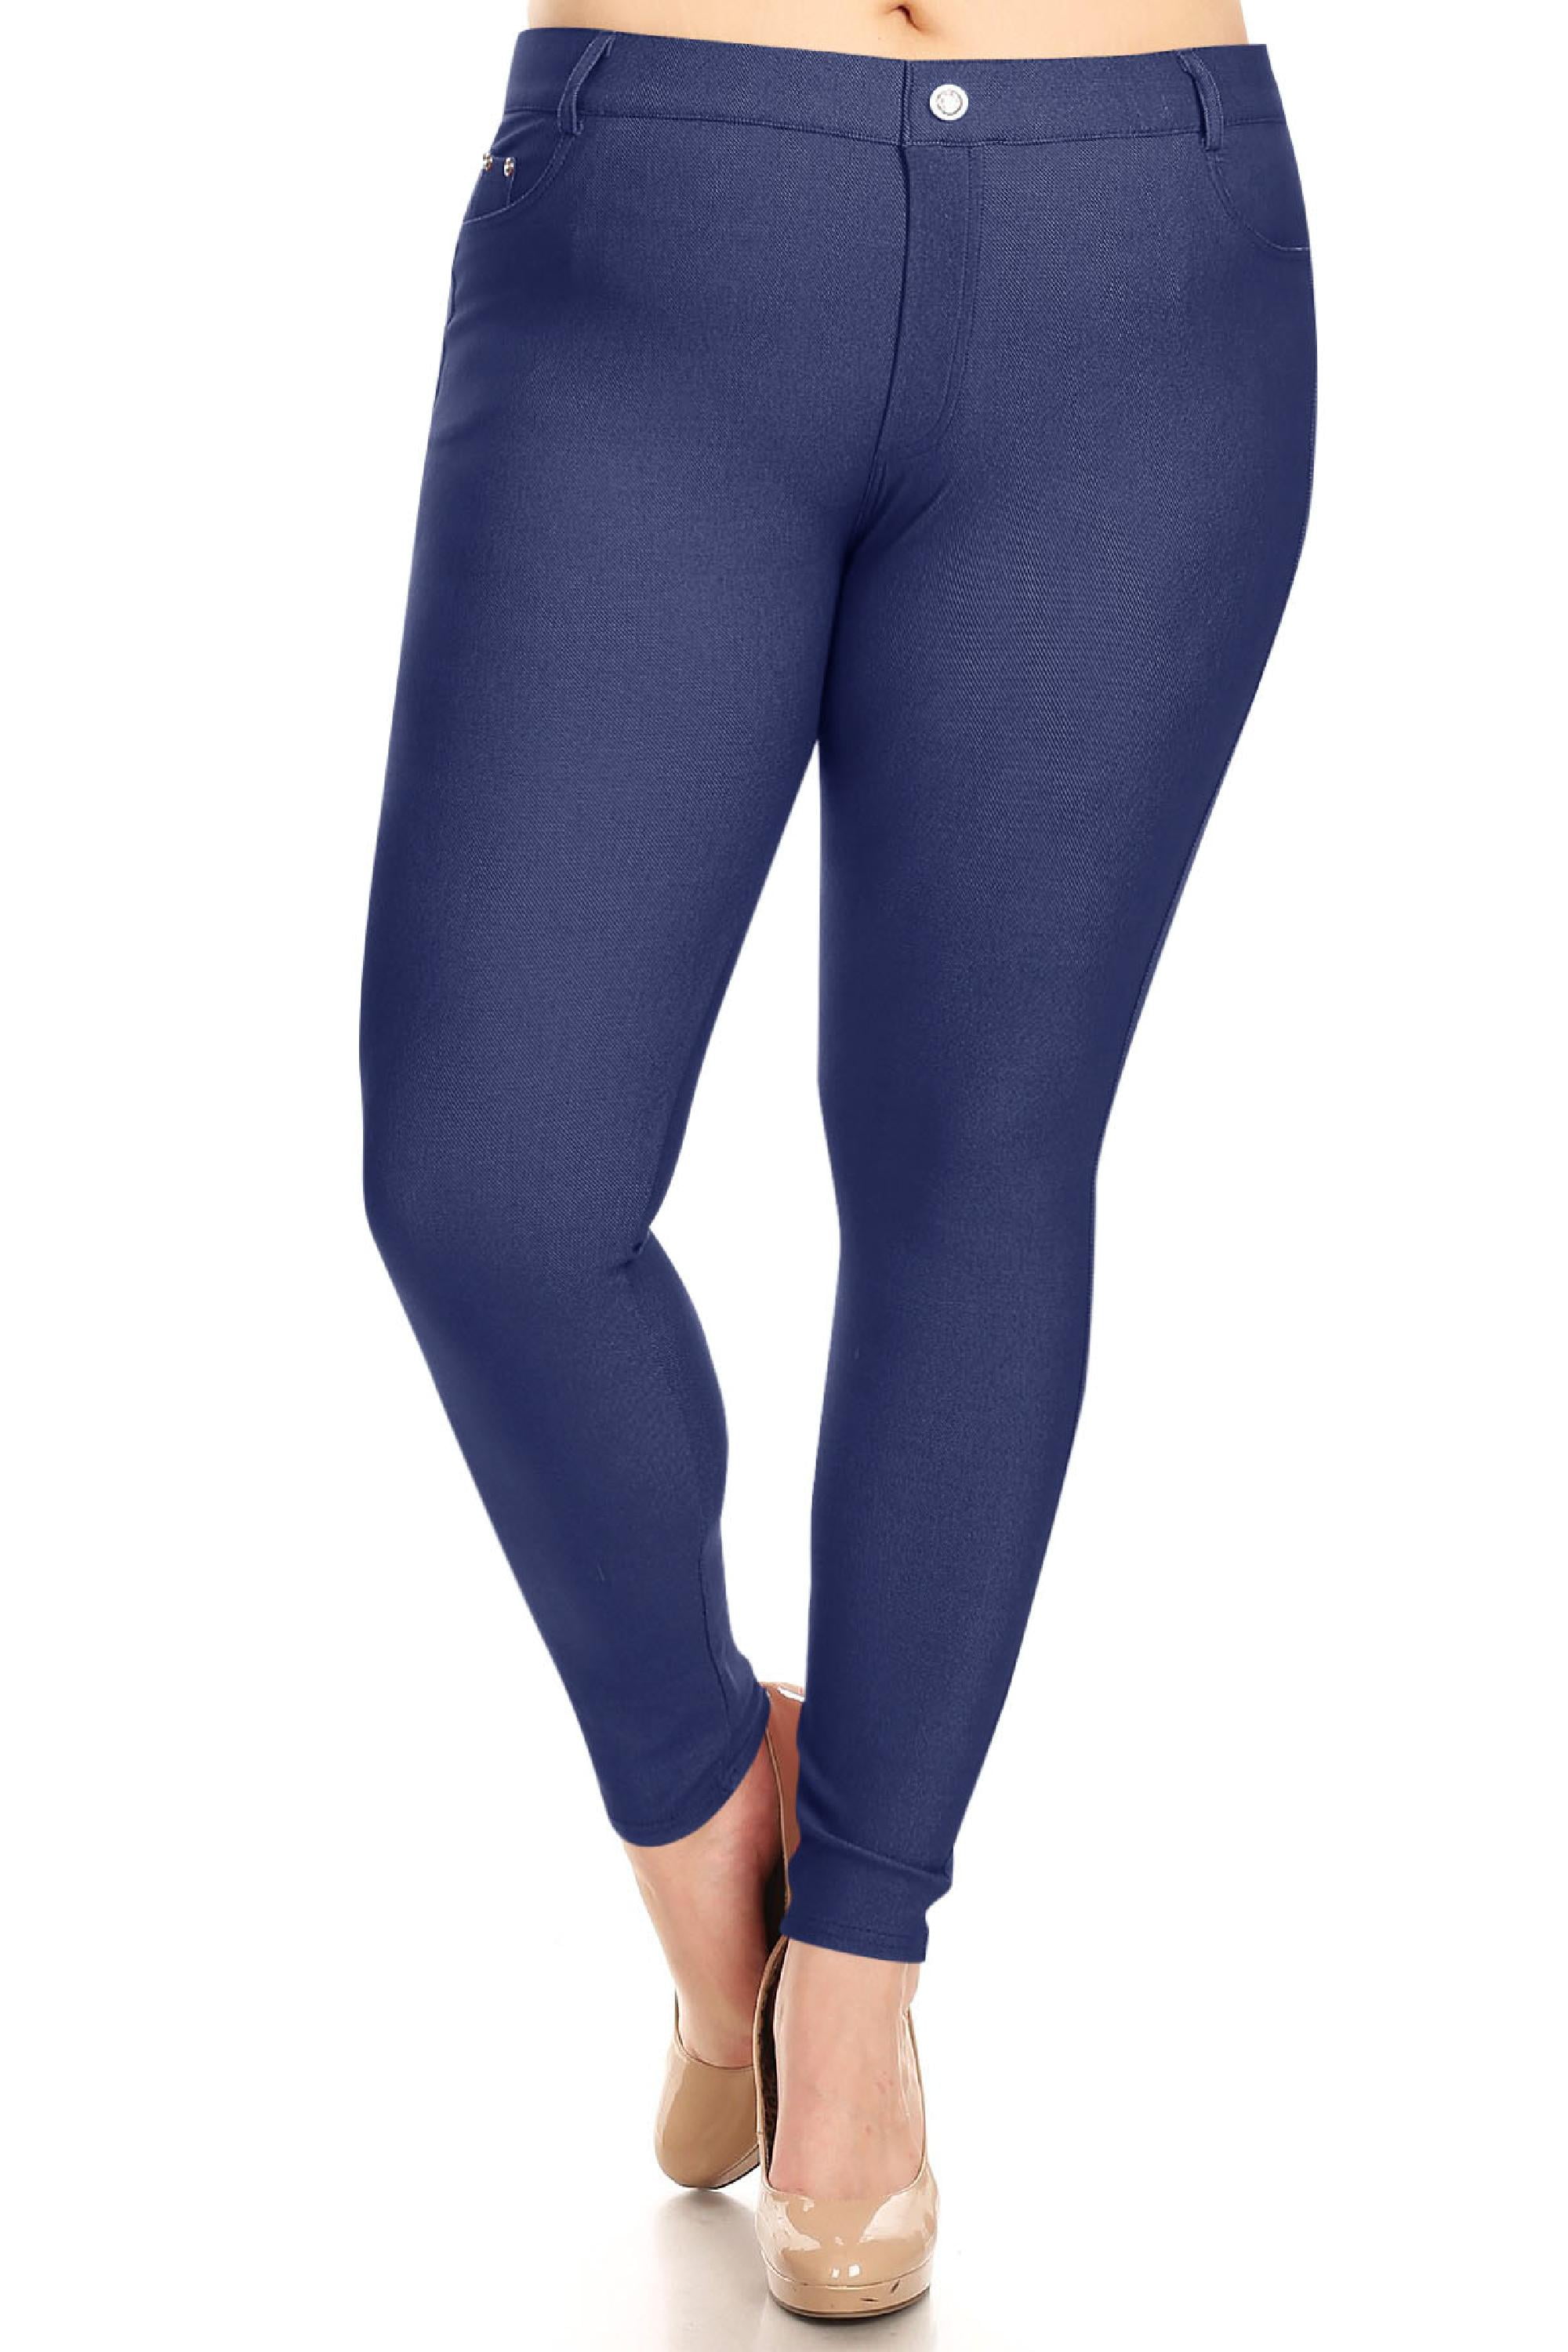 Womens Plus Size Stretch Casual Basic Pockets Button Solid Leggings Denim Jeans Pants 